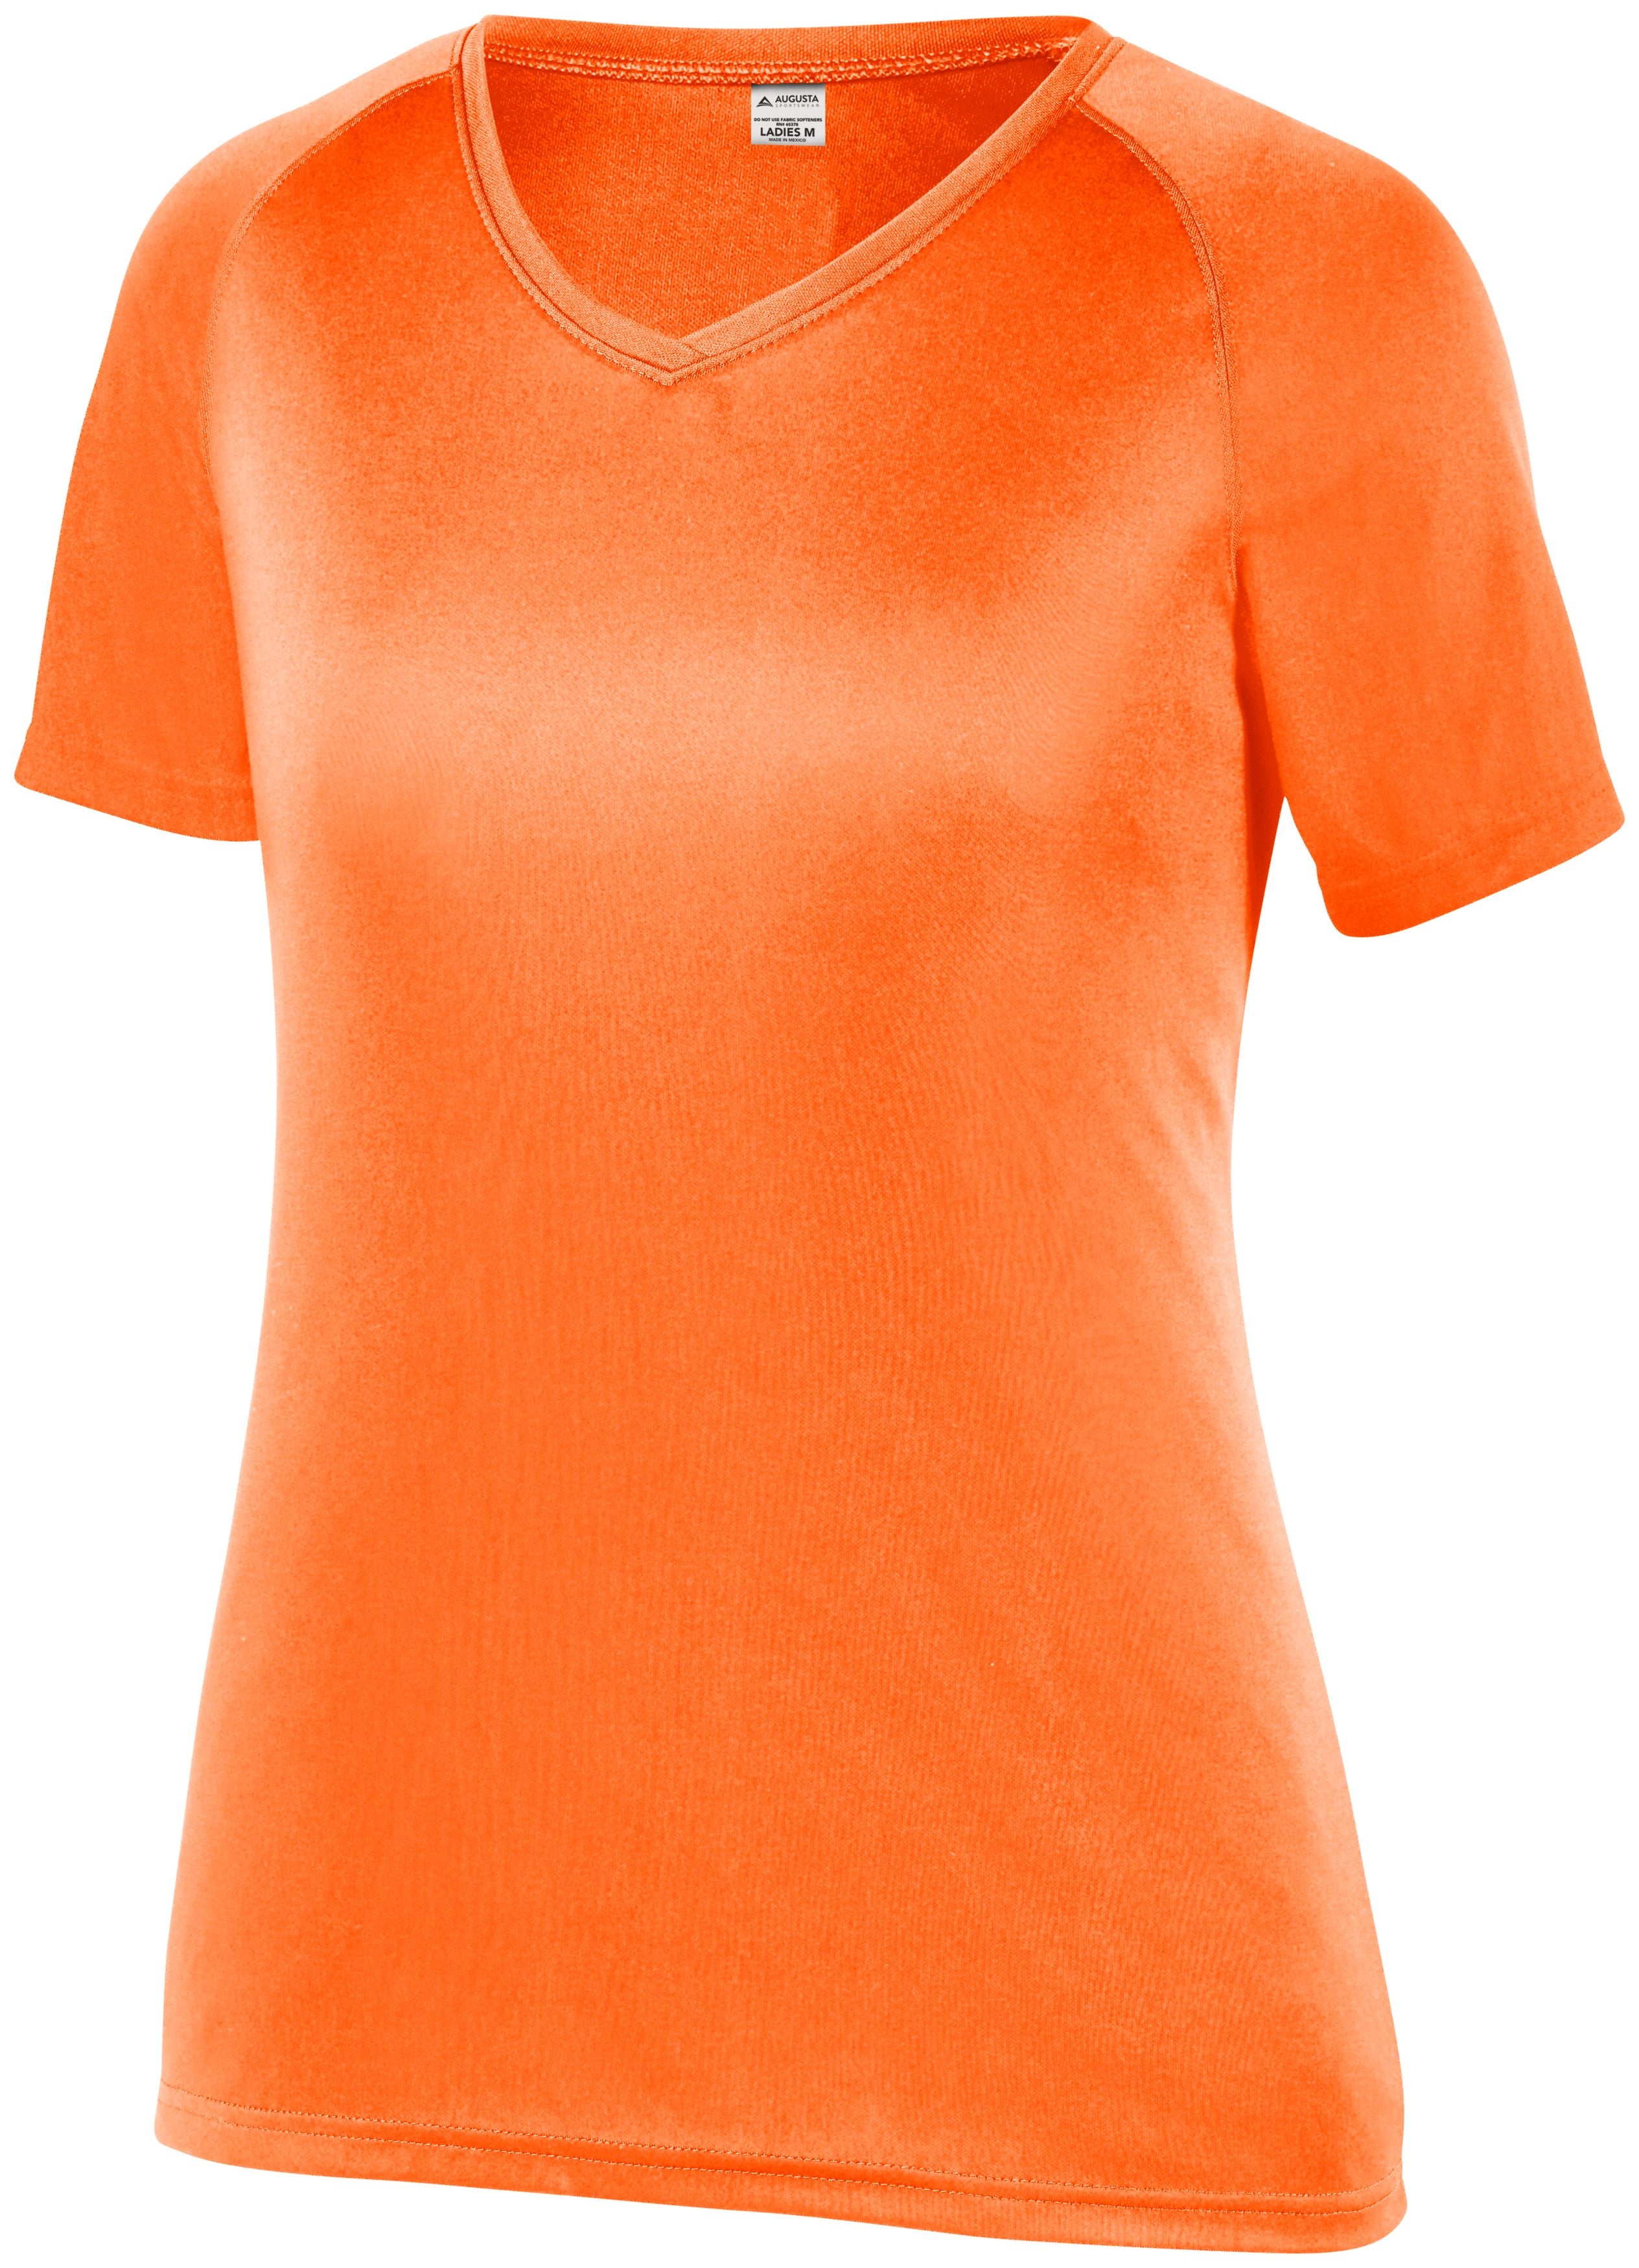 Augusta Sportswear Girls Attain Wicking Raglan Sleeve Tee in Power Orange  -Part of the Girls, T-Shirts, Augusta-Products, Girls-Tee-Shirt, Shirts product lines at KanaleyCreations.com